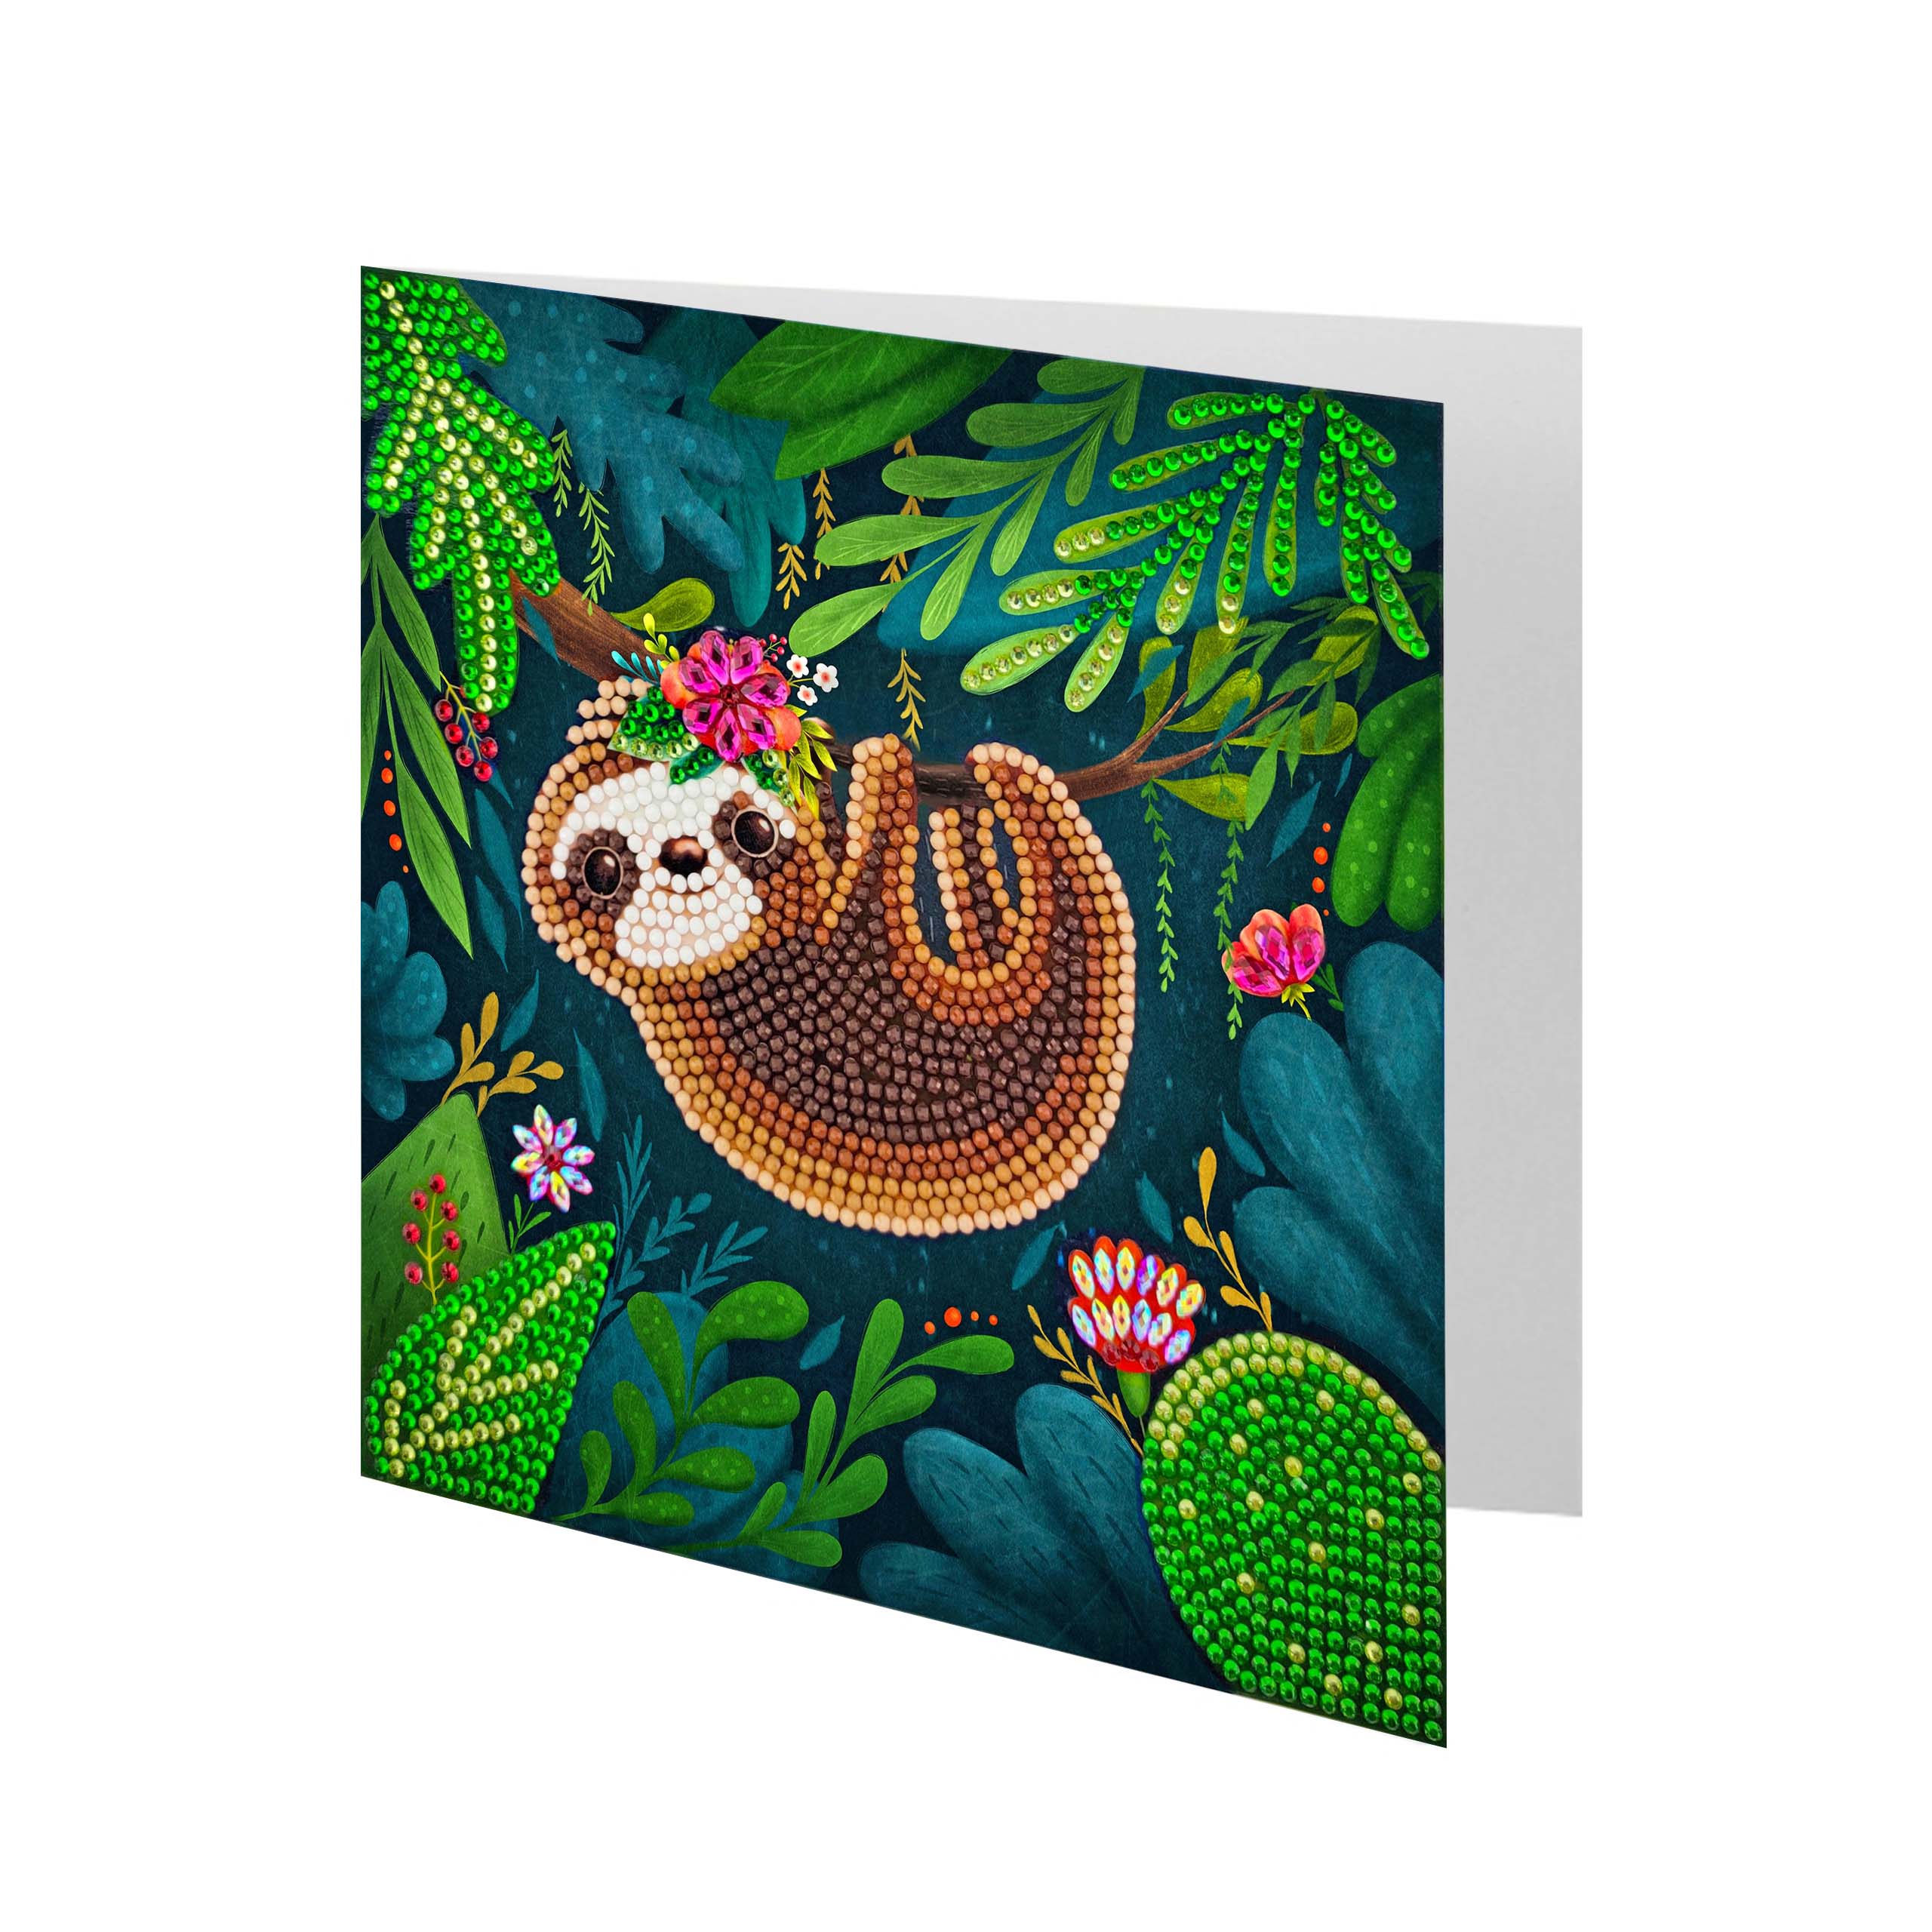 Sloth Crystal Card Kit